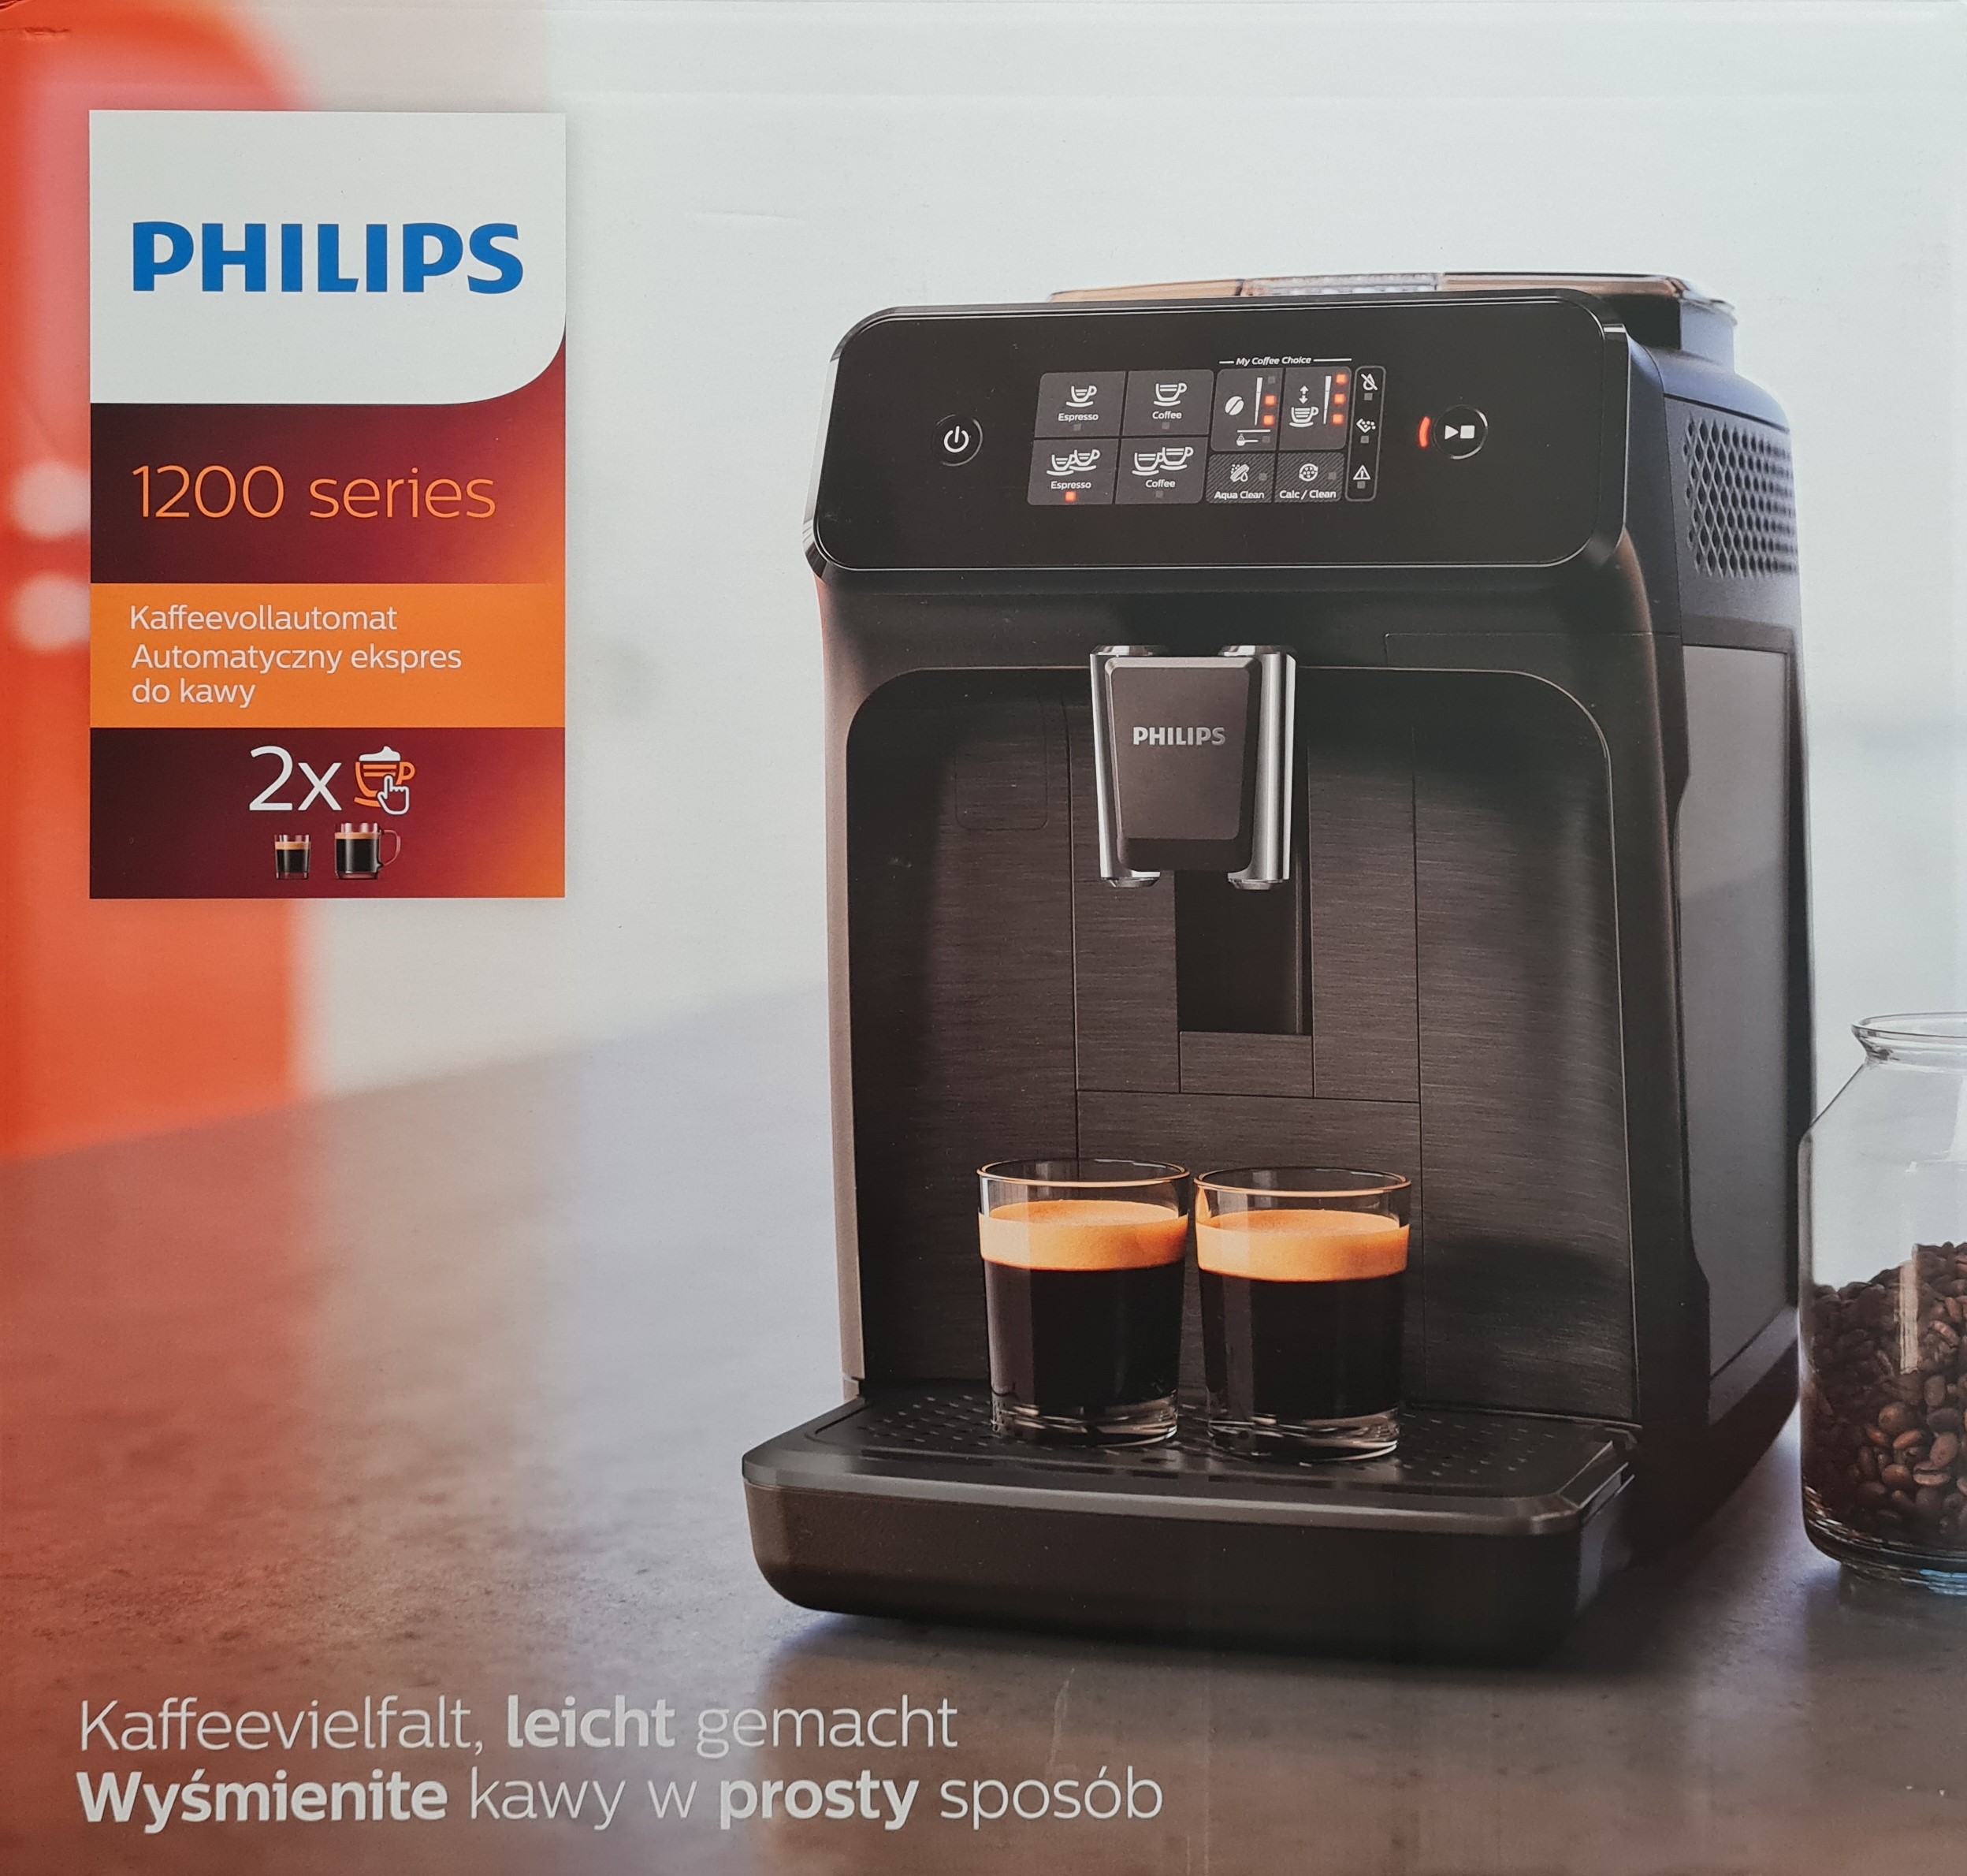 EP1200/00 Philips Series 1200